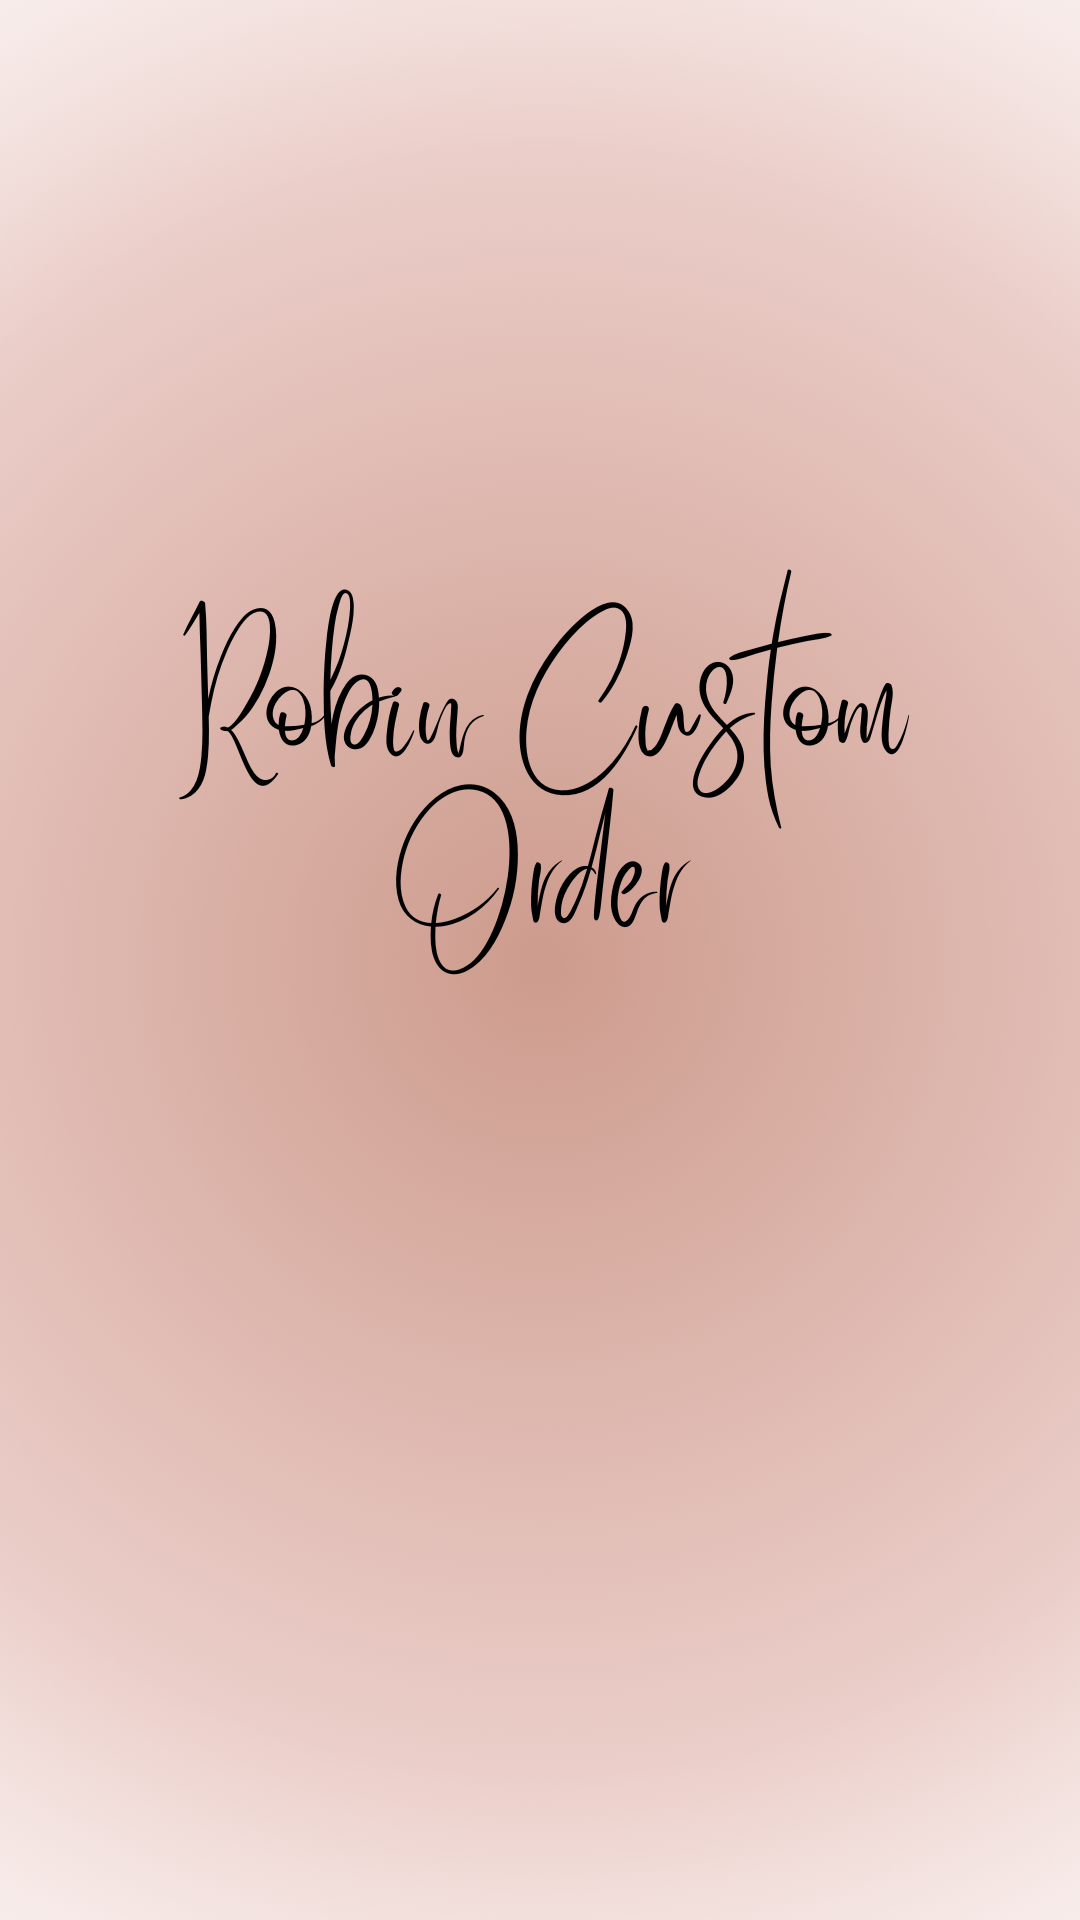 Robin Custom Order